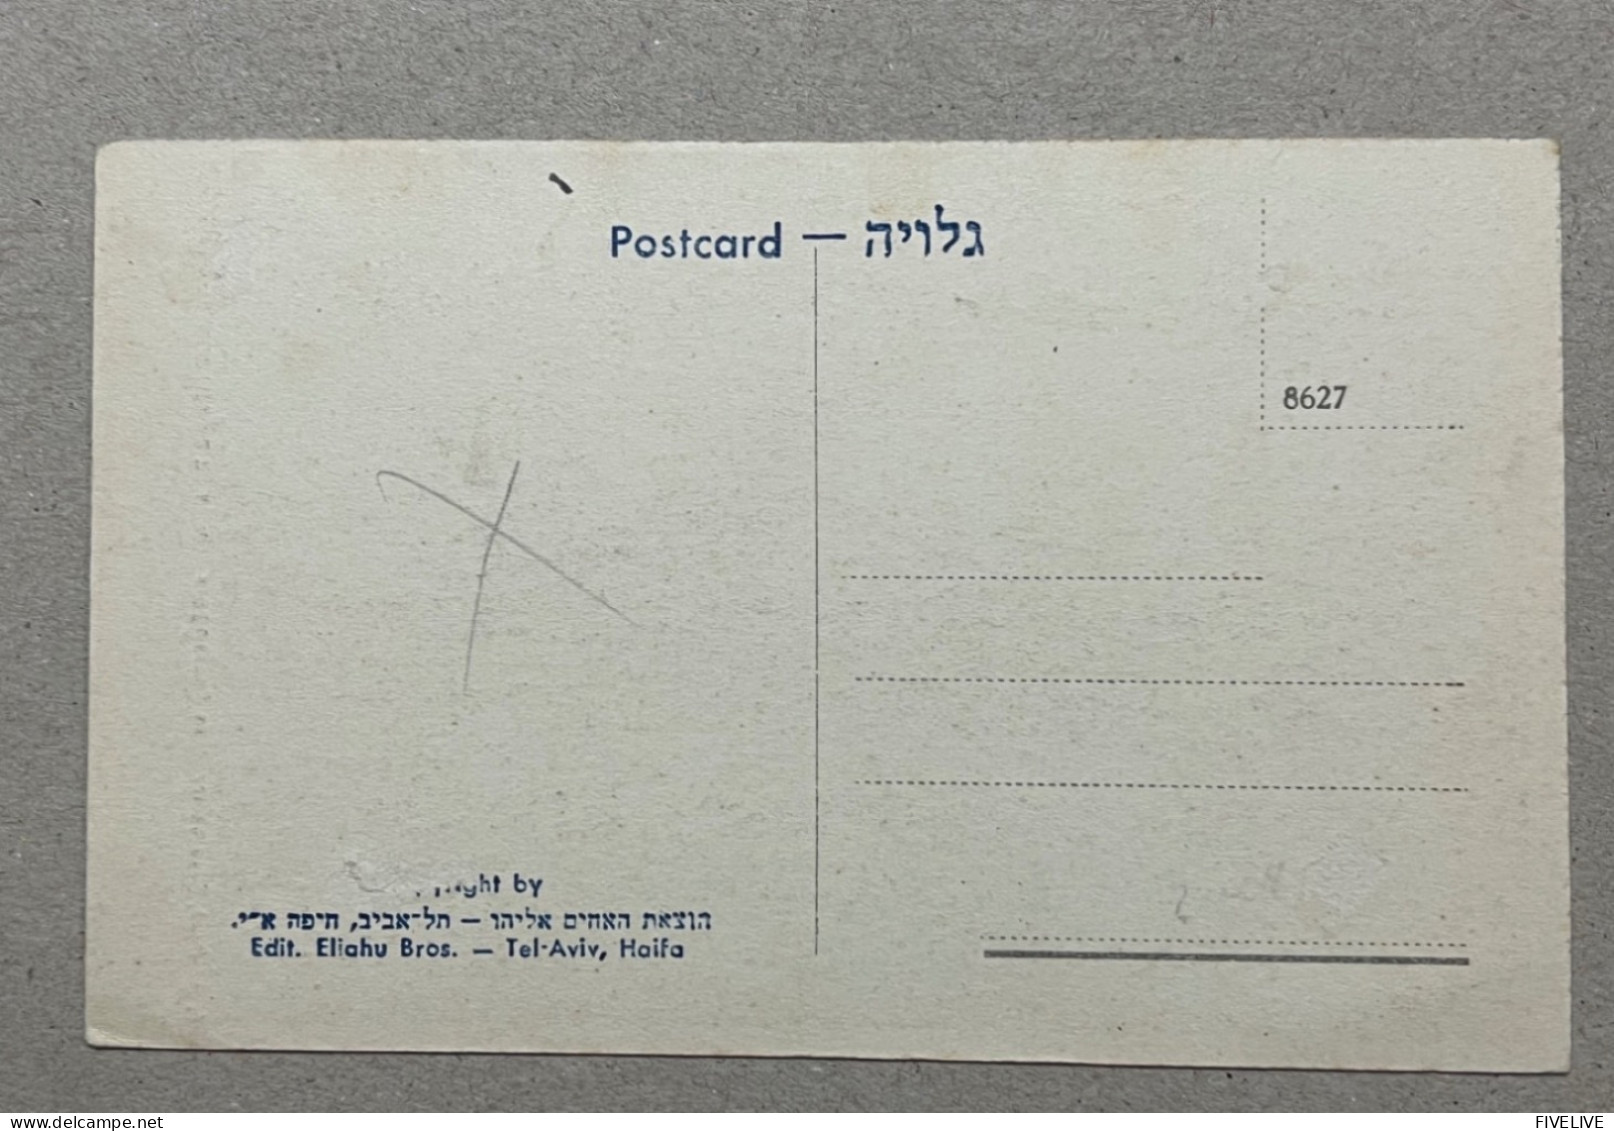 JUDAICA JEWISH POSTCARD POSTKARTE BY ELIAHU BROS. TEL AVIV, Port, Disembarcation Passengers. PALESTINE, ISRAEL - Palestine